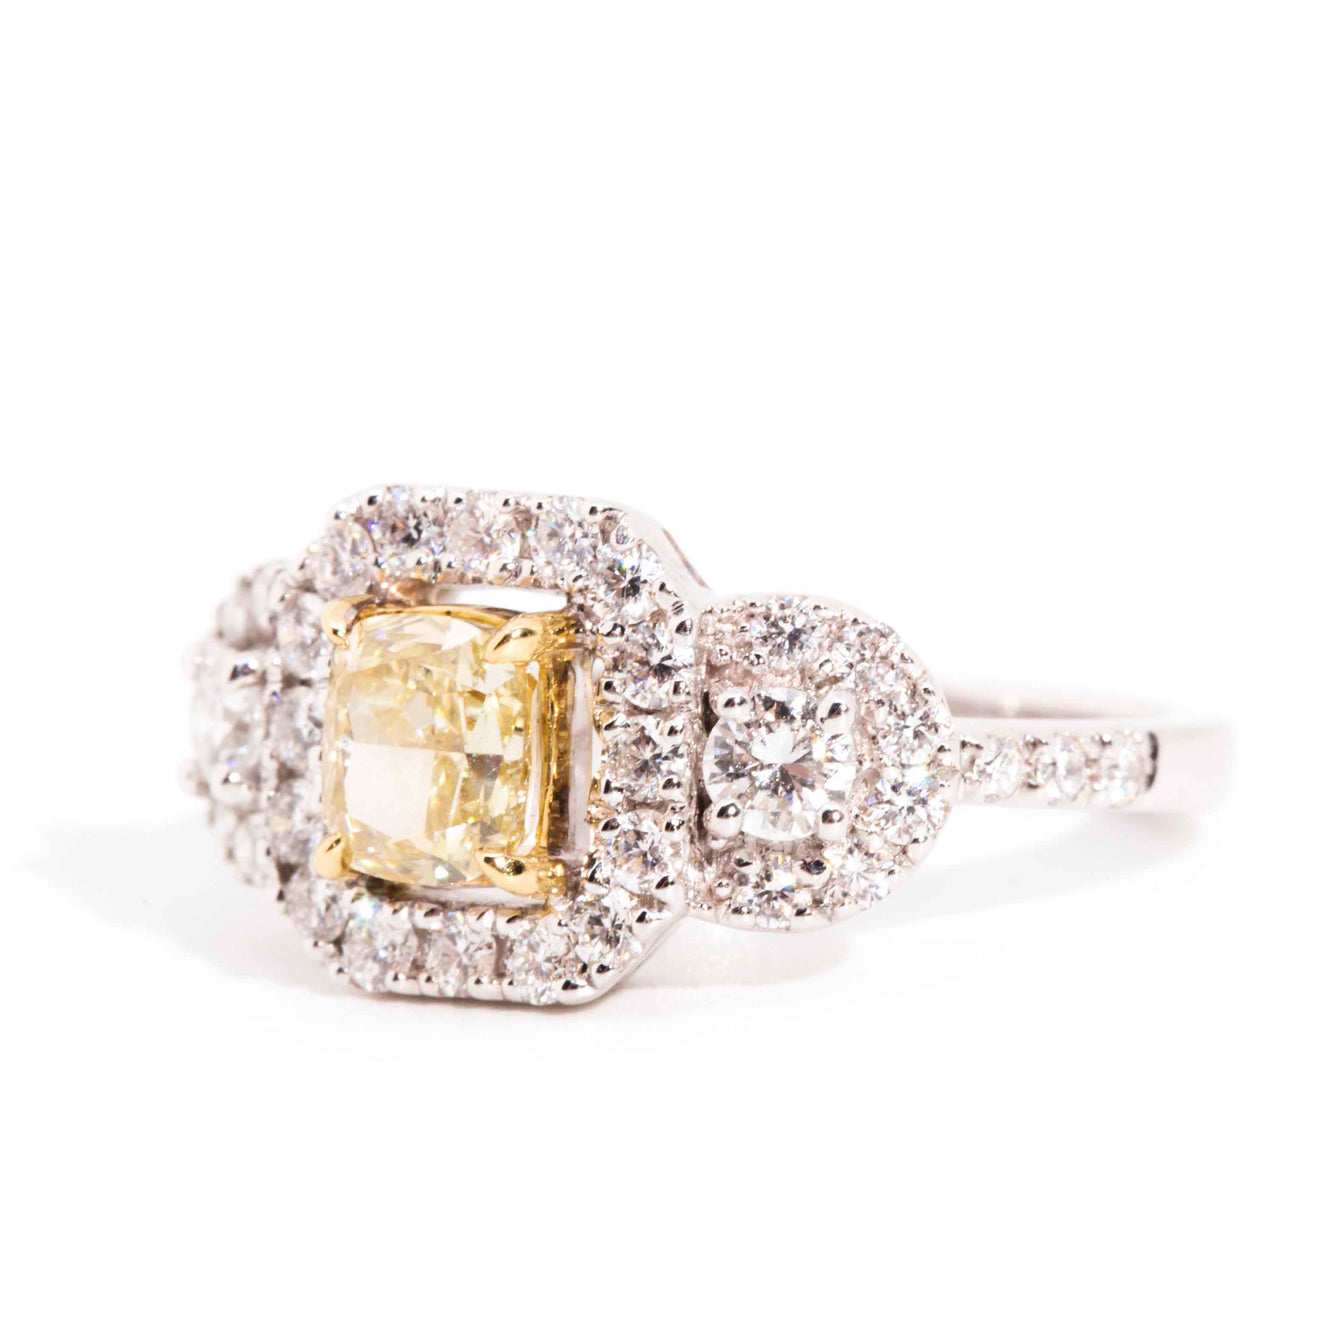 Wynter Certified 1.01 Carat Fancy Yellow Diamond Vintage Ring*LB Rings Imperial Jewellery